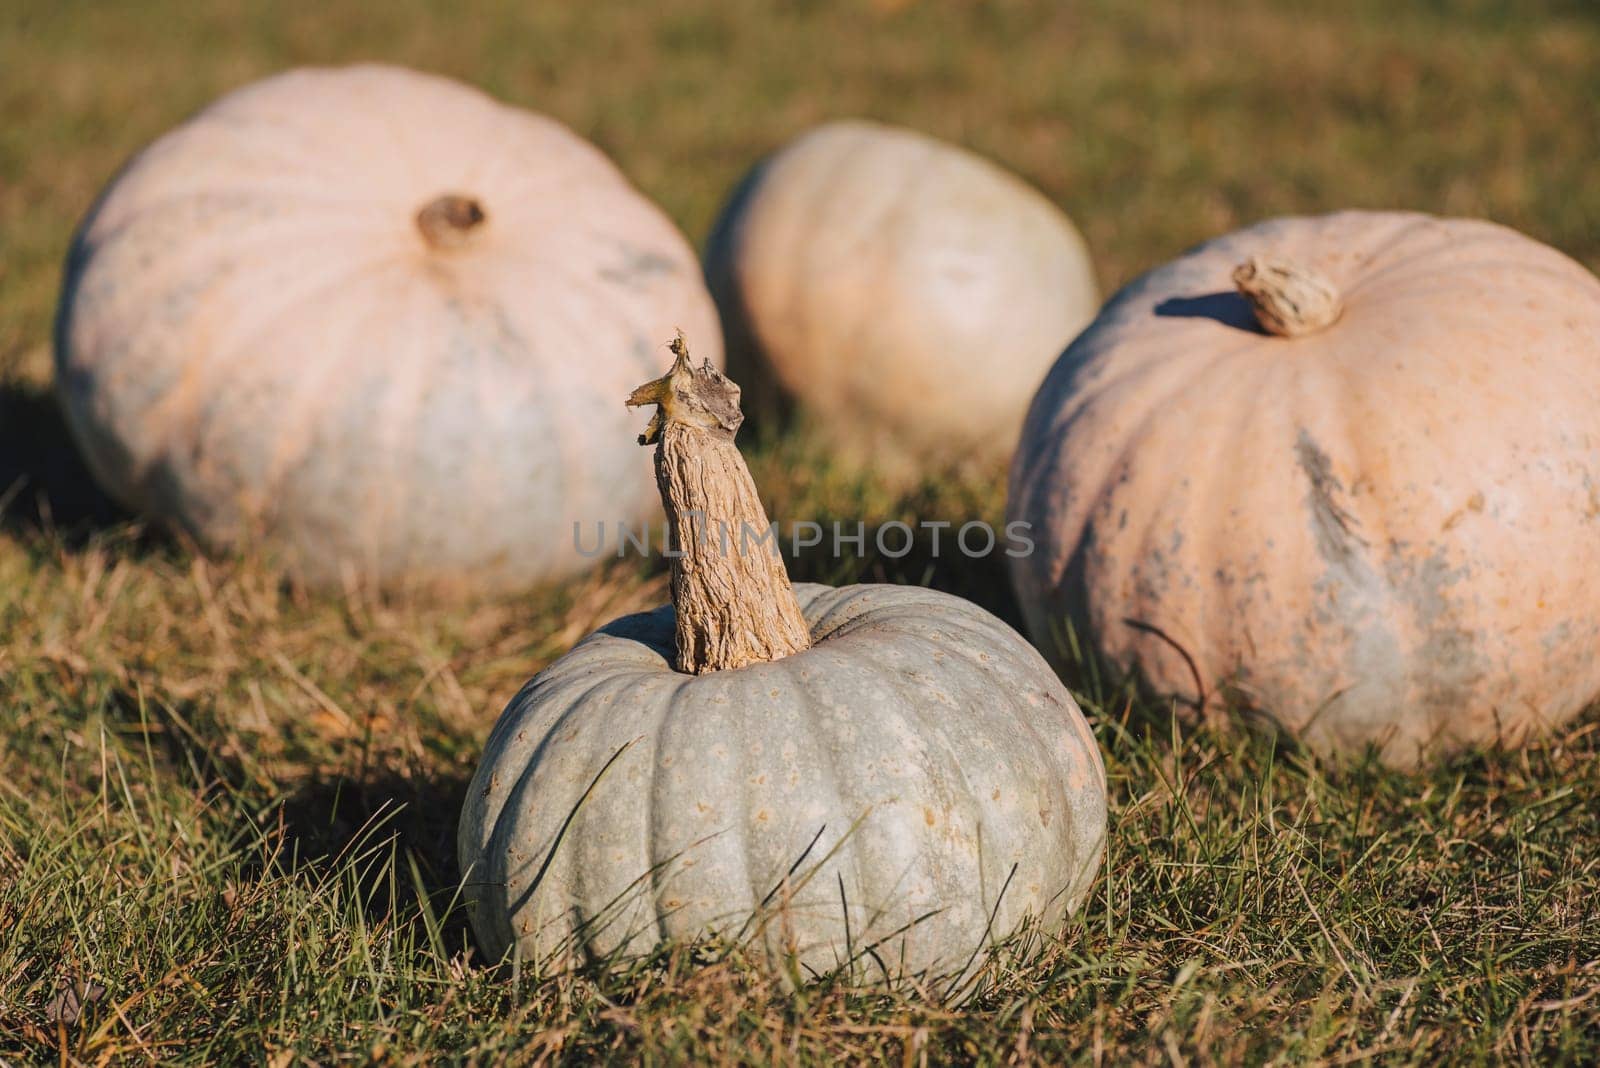 Harvest of pumpkins in autumn